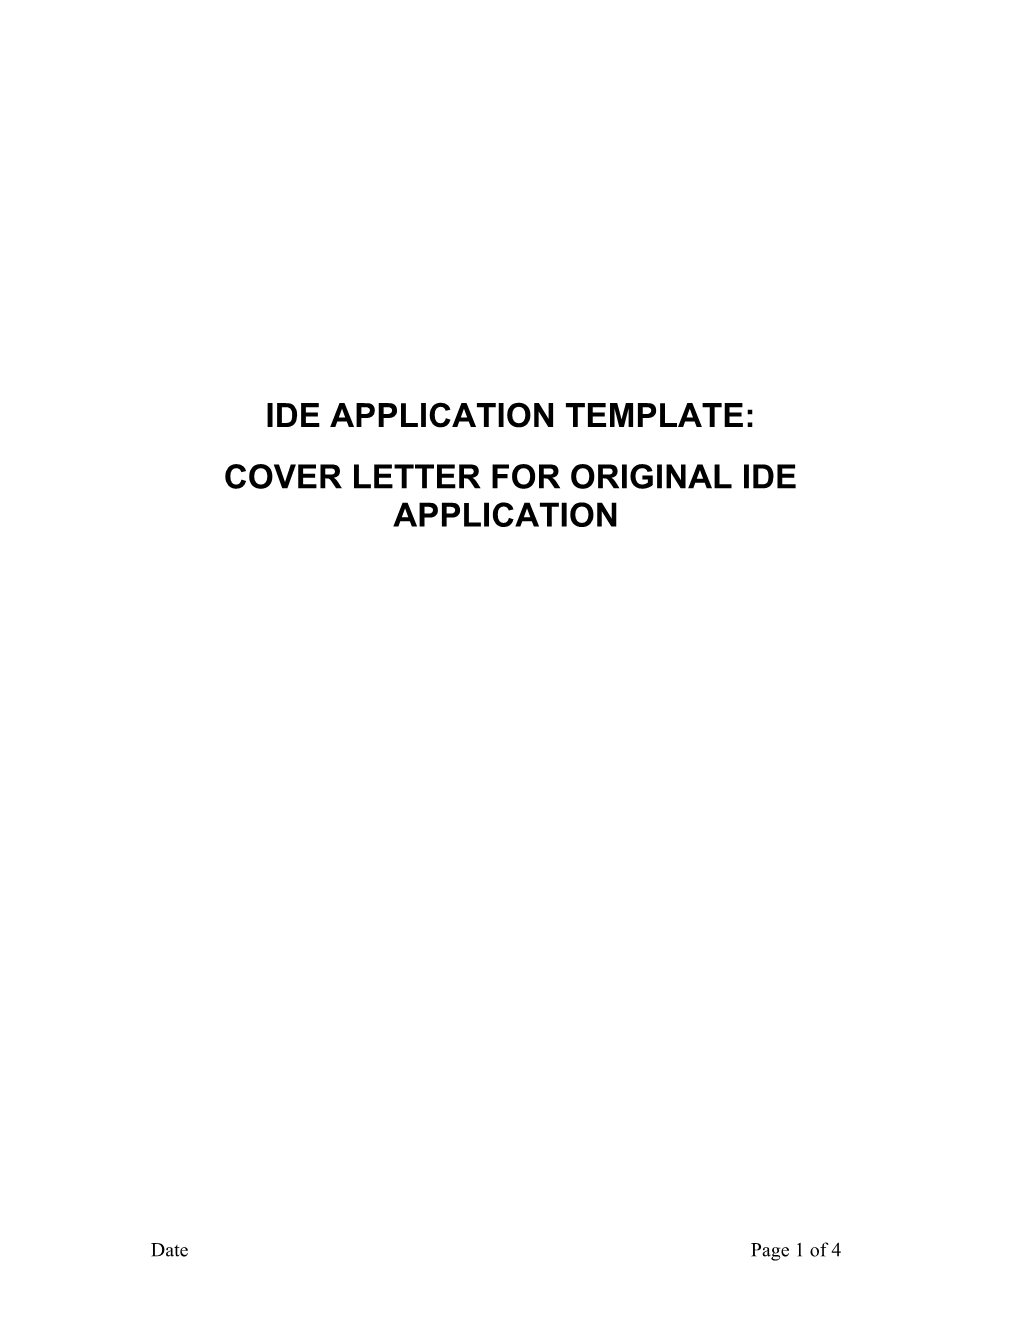 Cover Letter for Original Ide Application